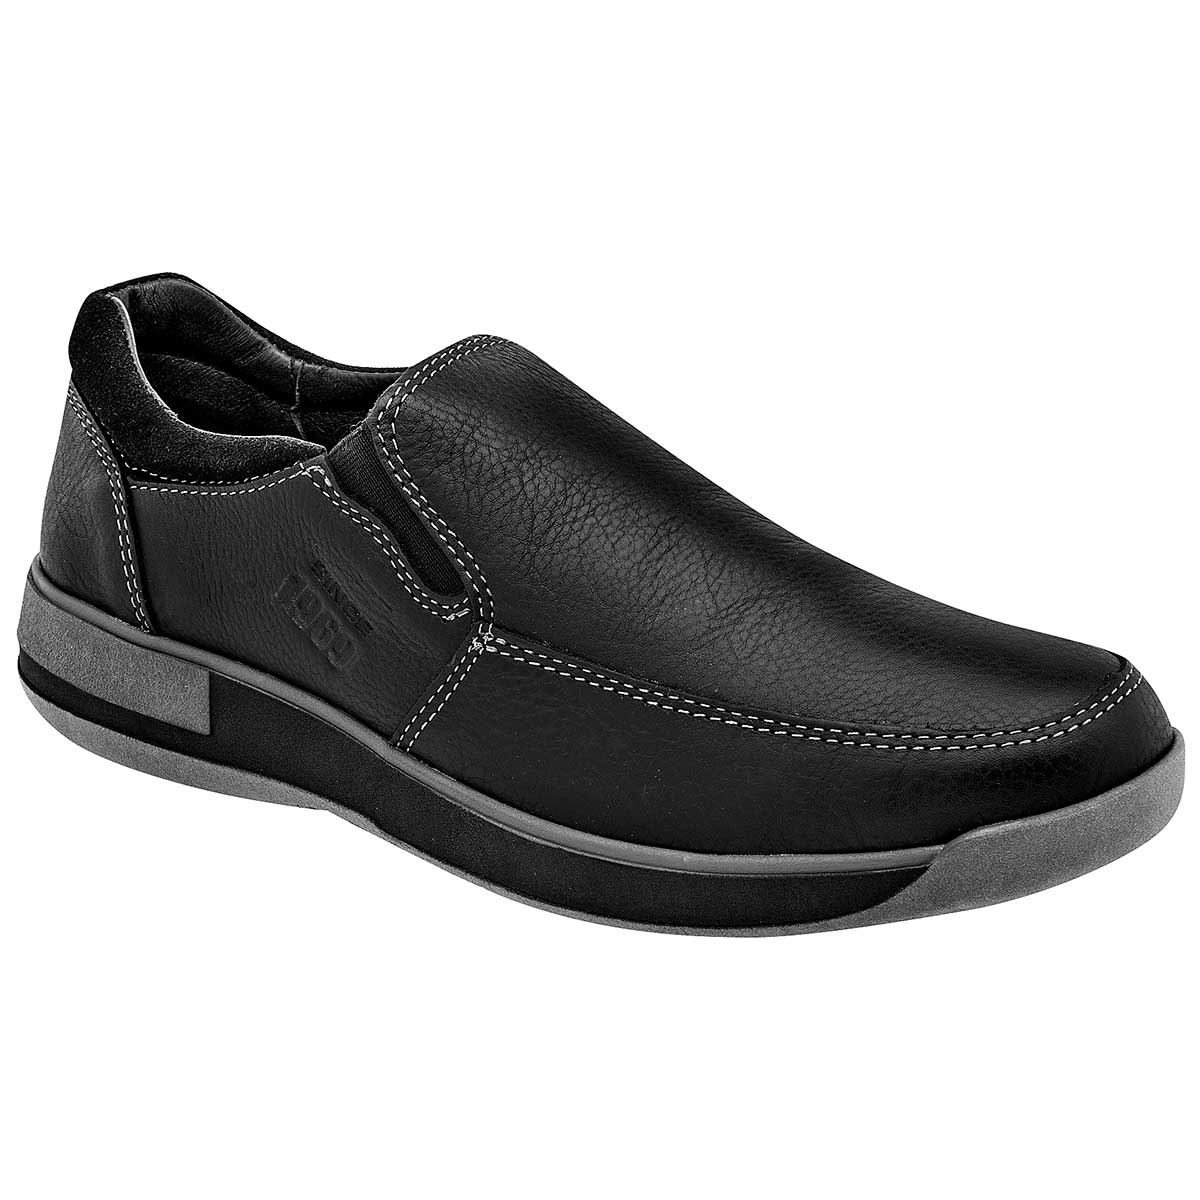 Pakar.com - Abril: Mes del niño | Zapato casual para hombre cod-91236